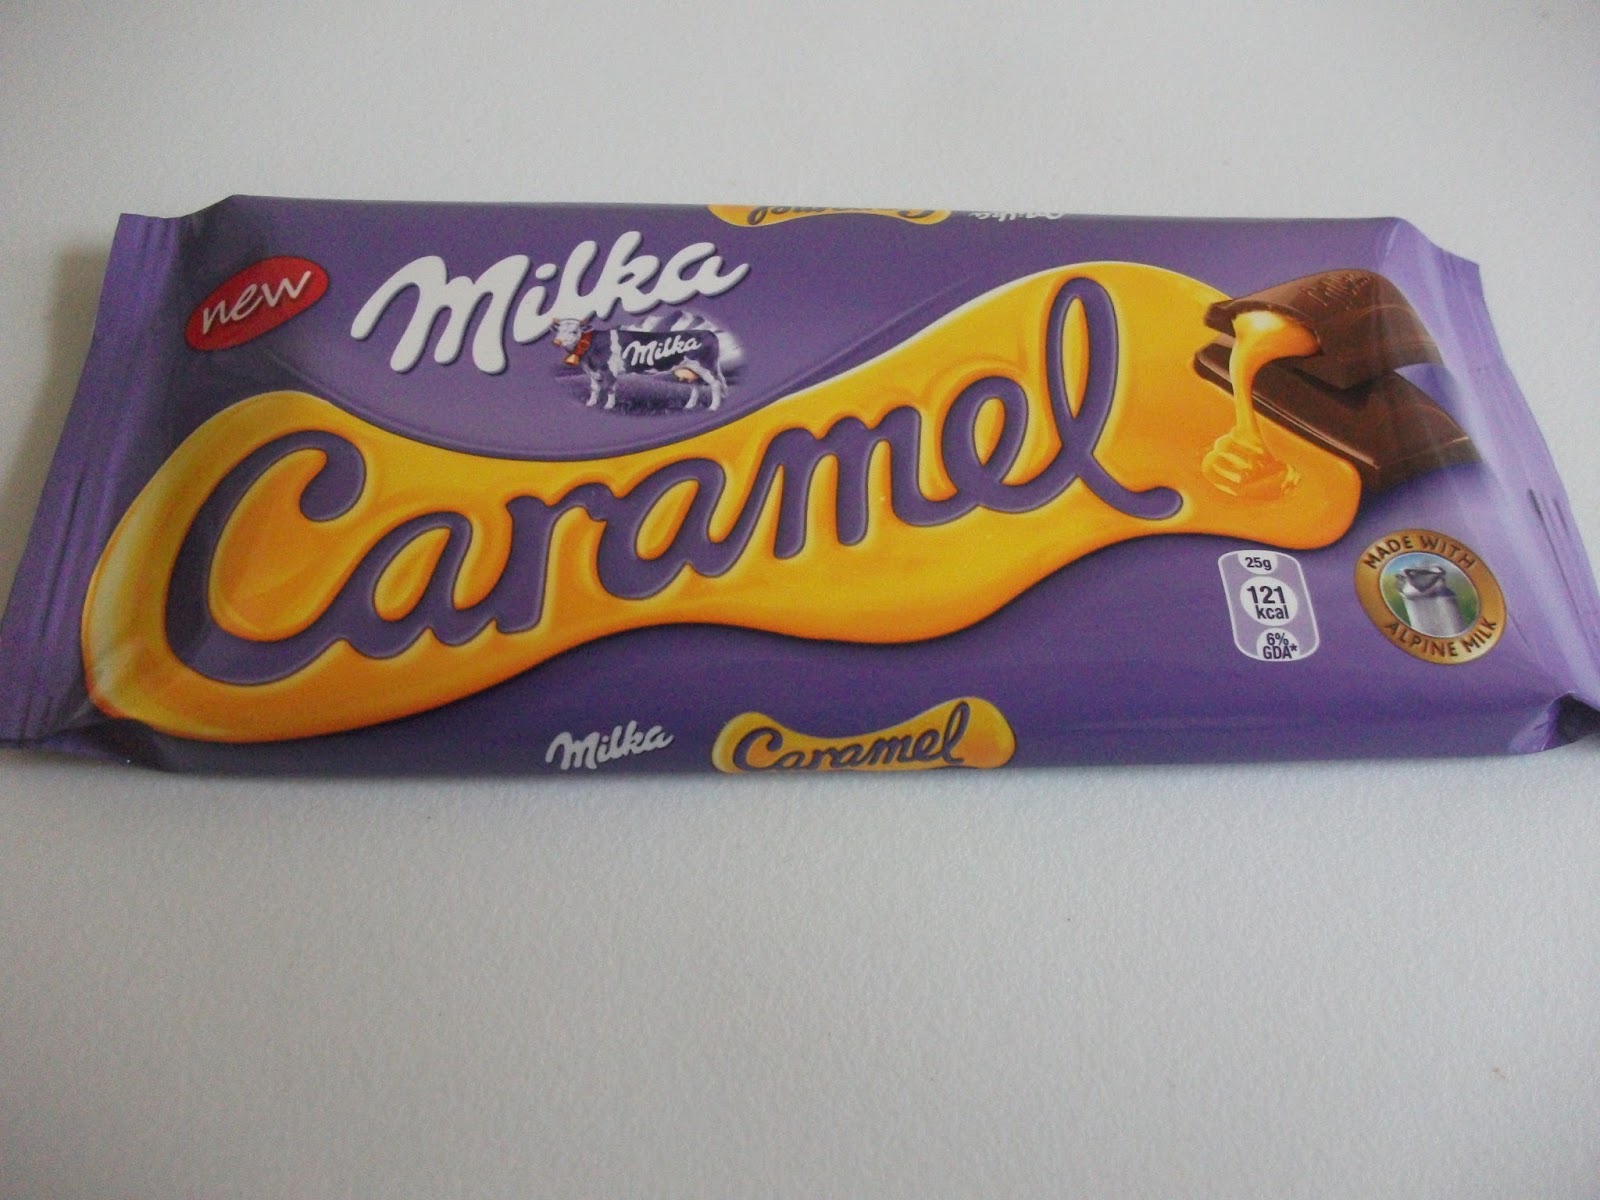 Milka Caramel Review (Polish version)